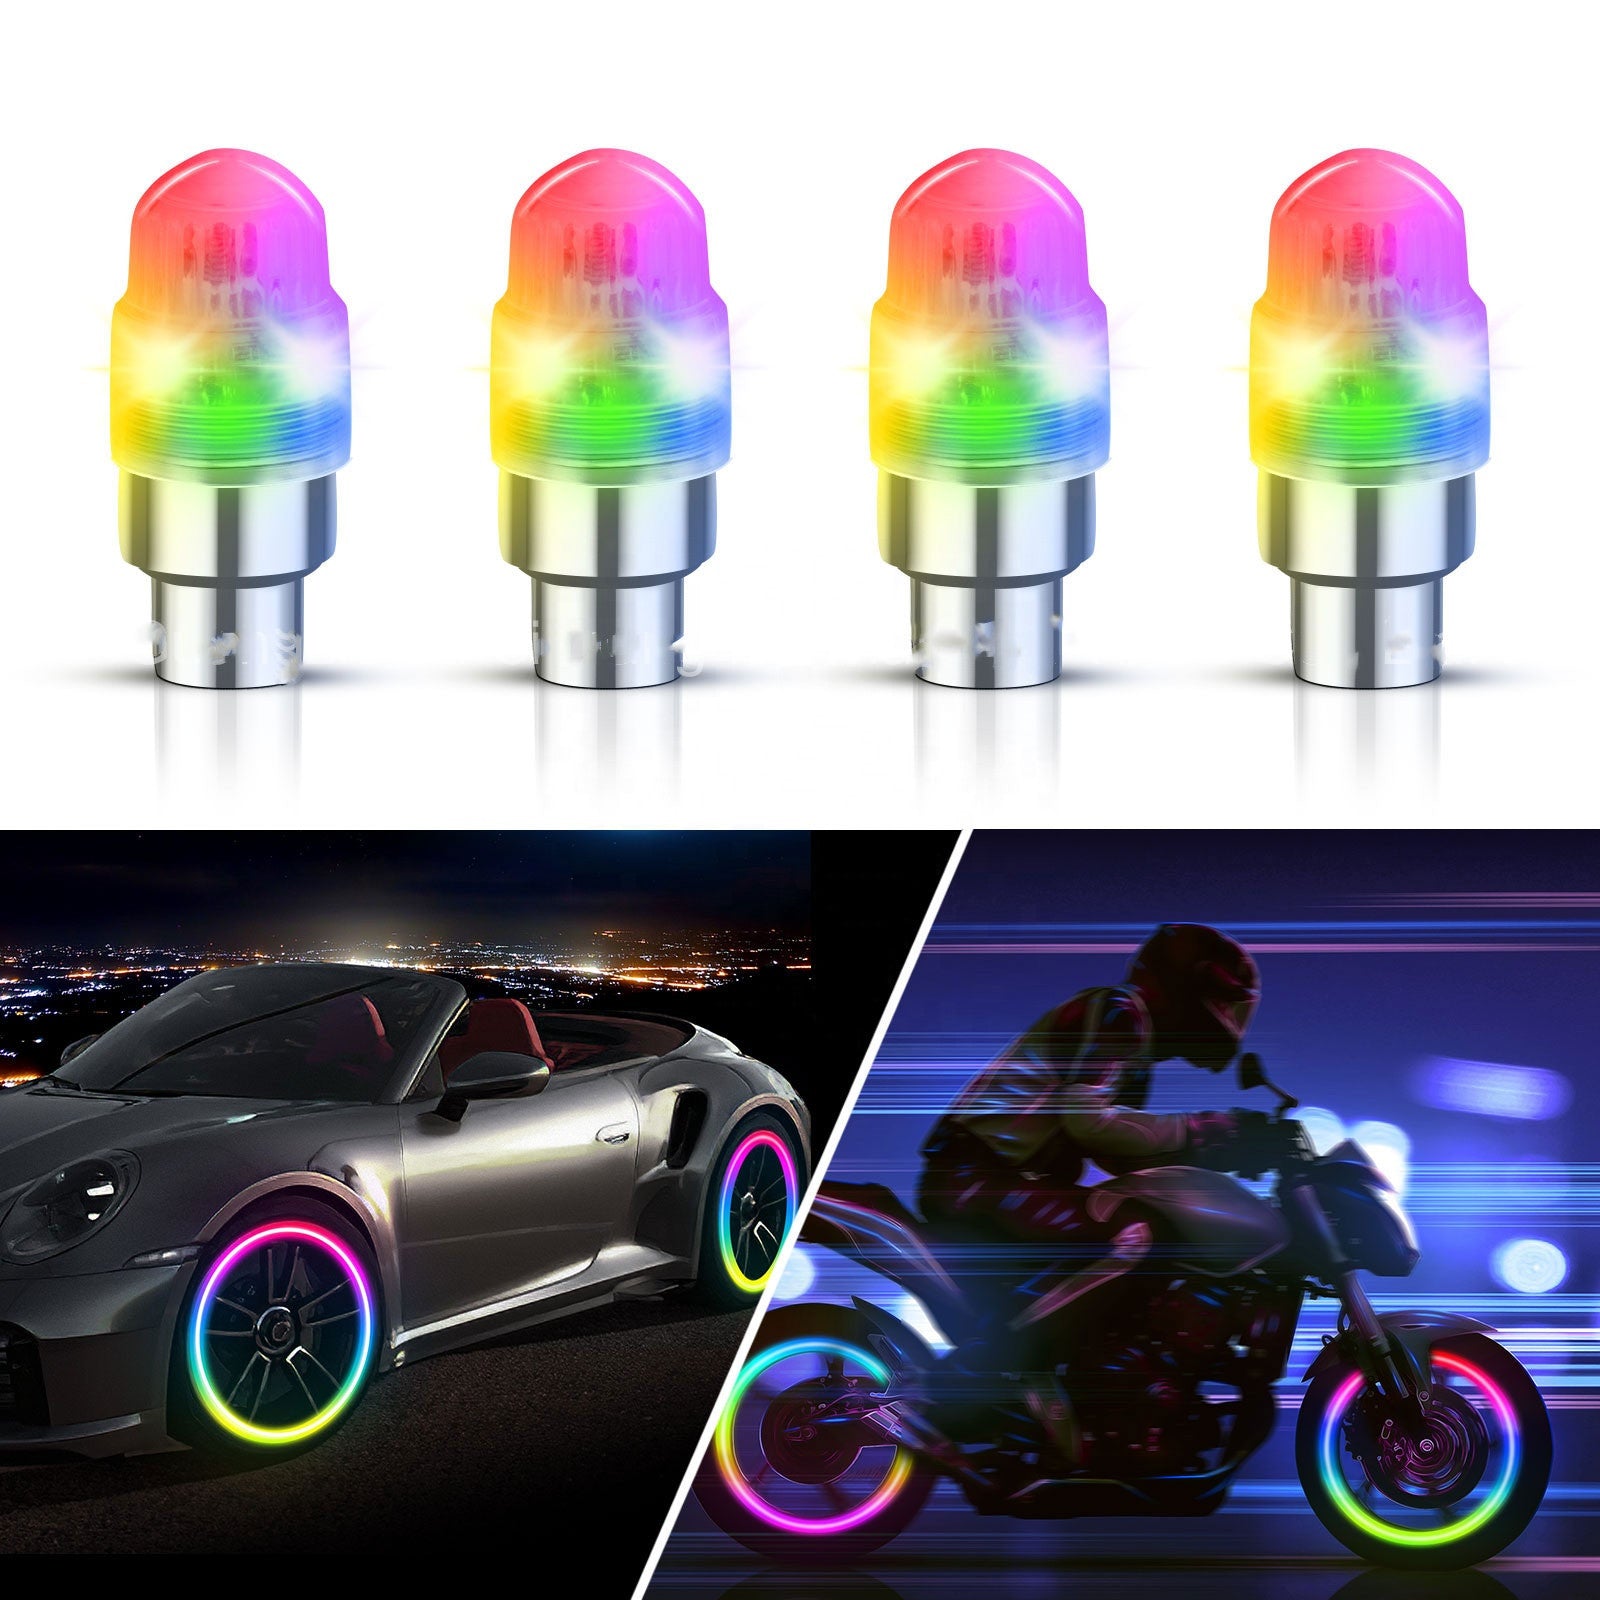 LED Tire Valve Caps For Cars & Bikes